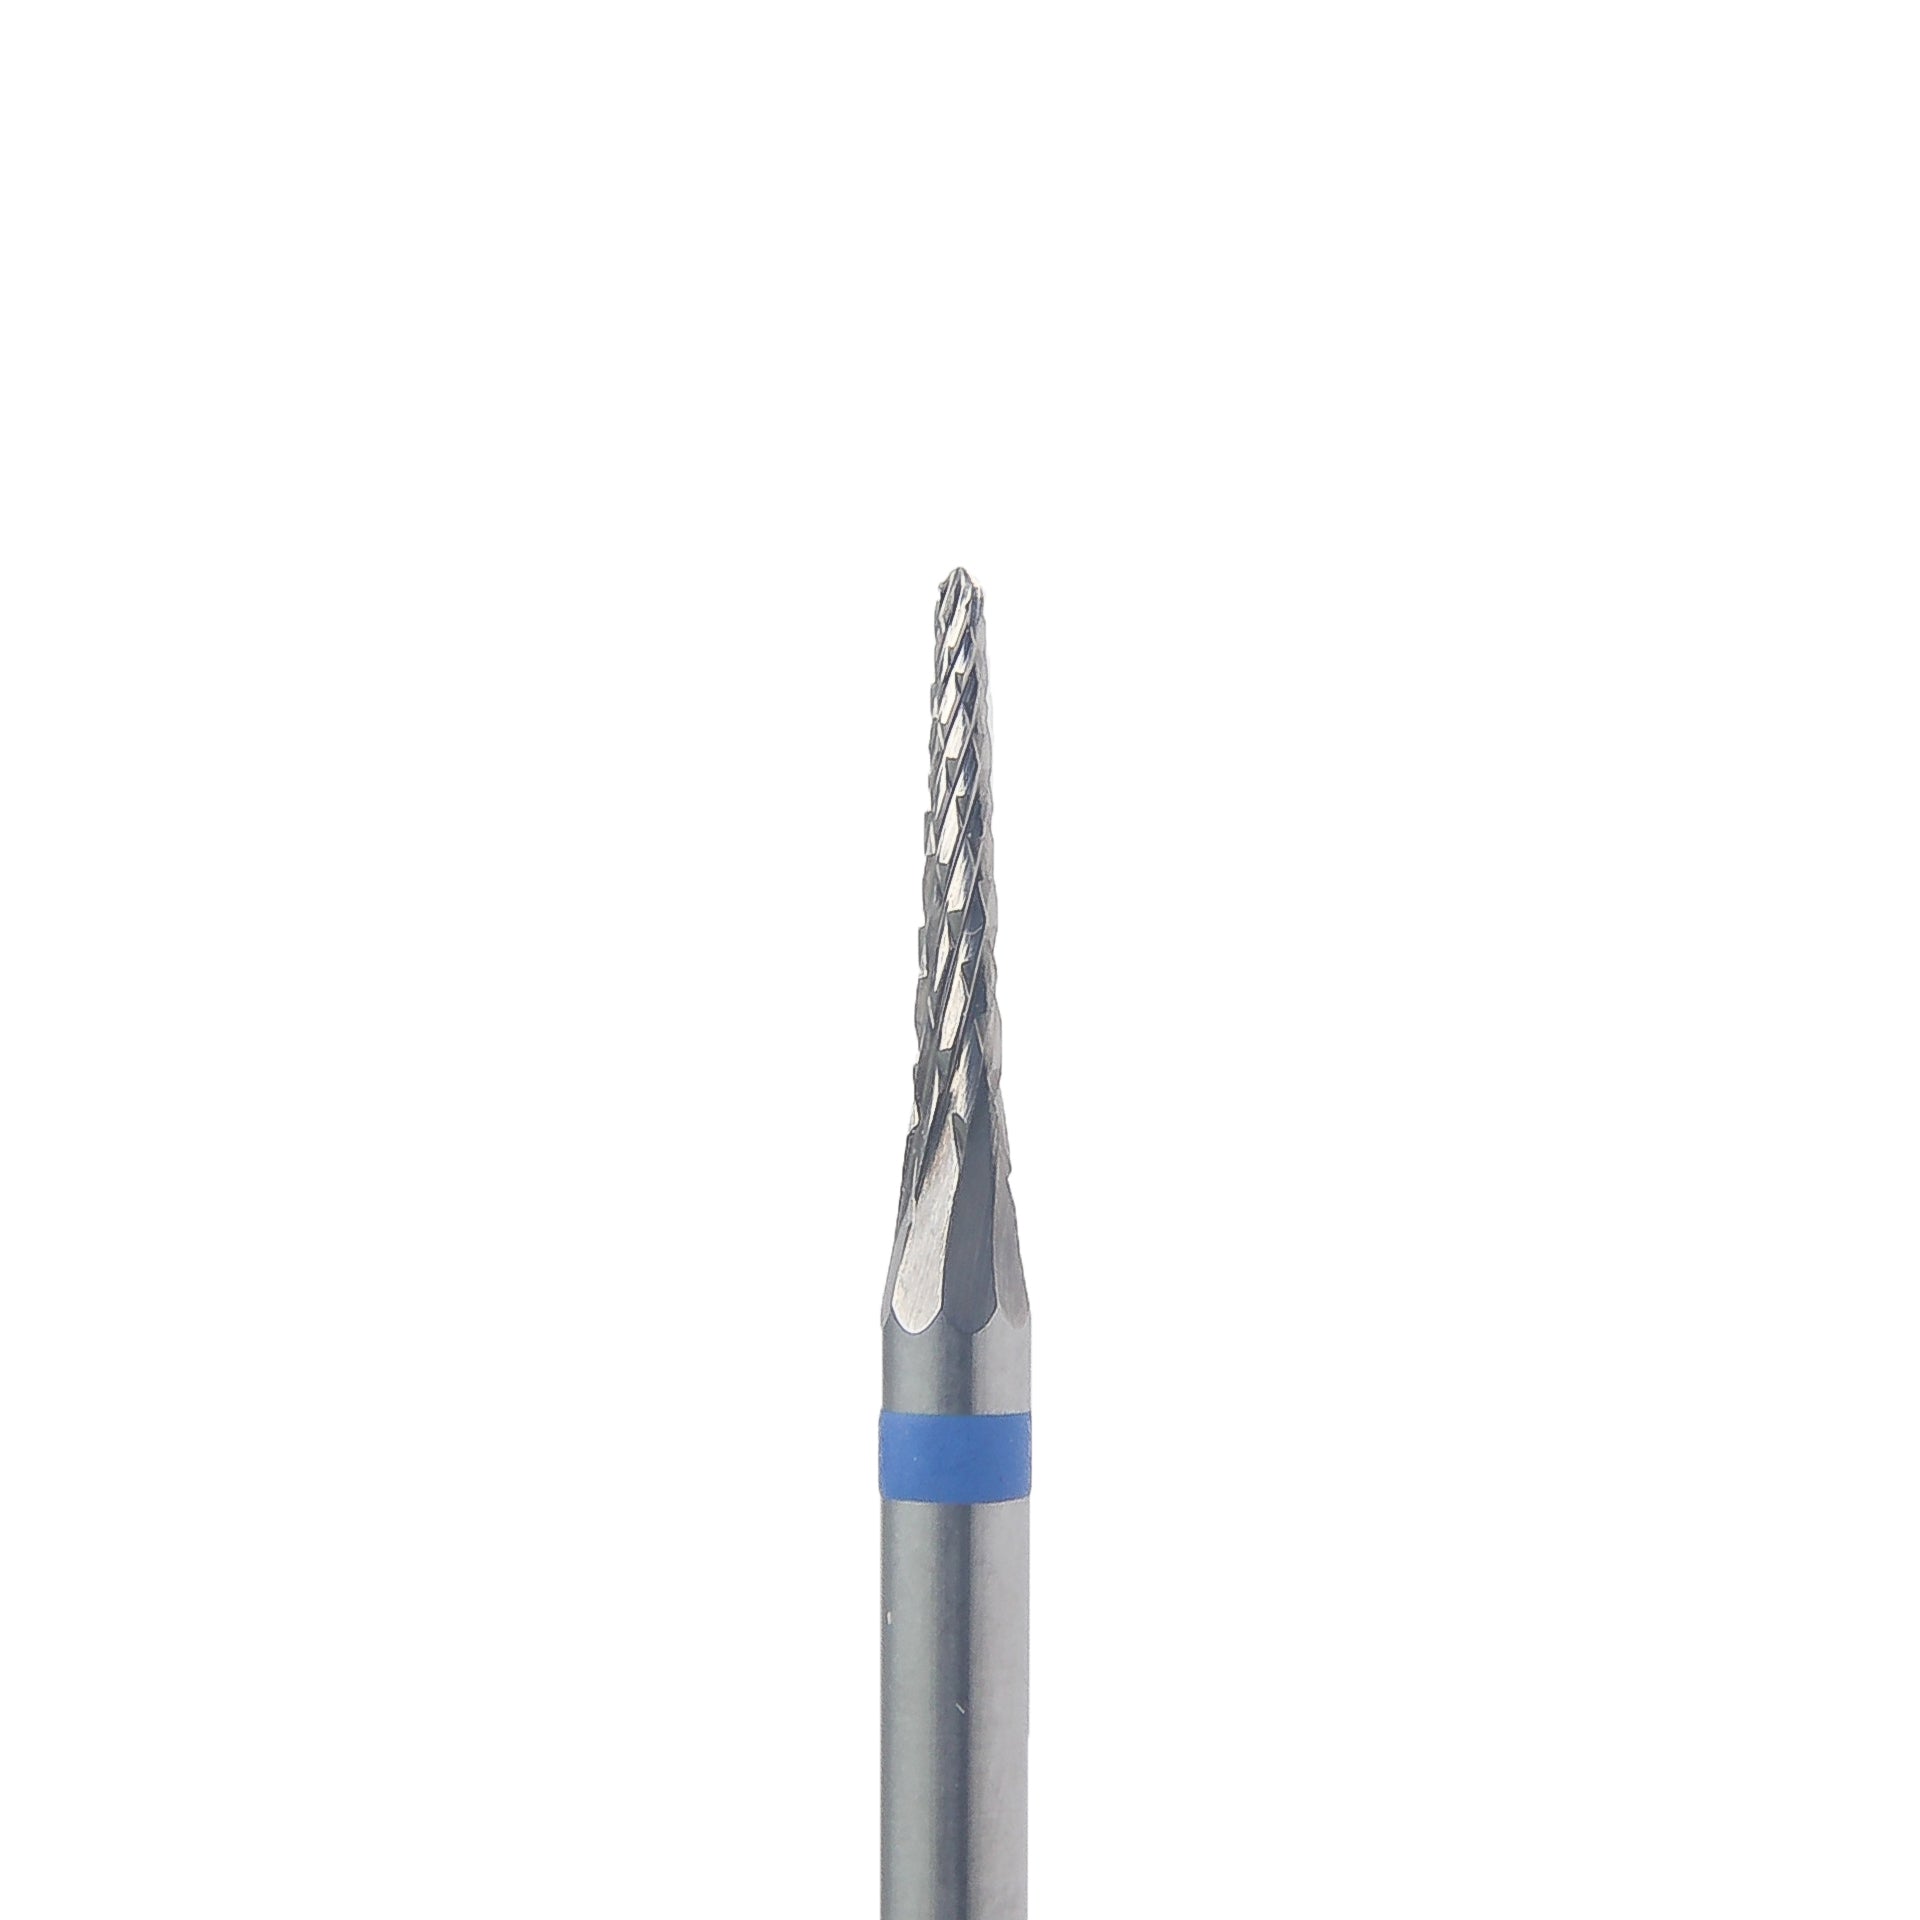 KMIZ Tungsten Carbide Needle E-File Nail Bit, 1.6mm, Blue